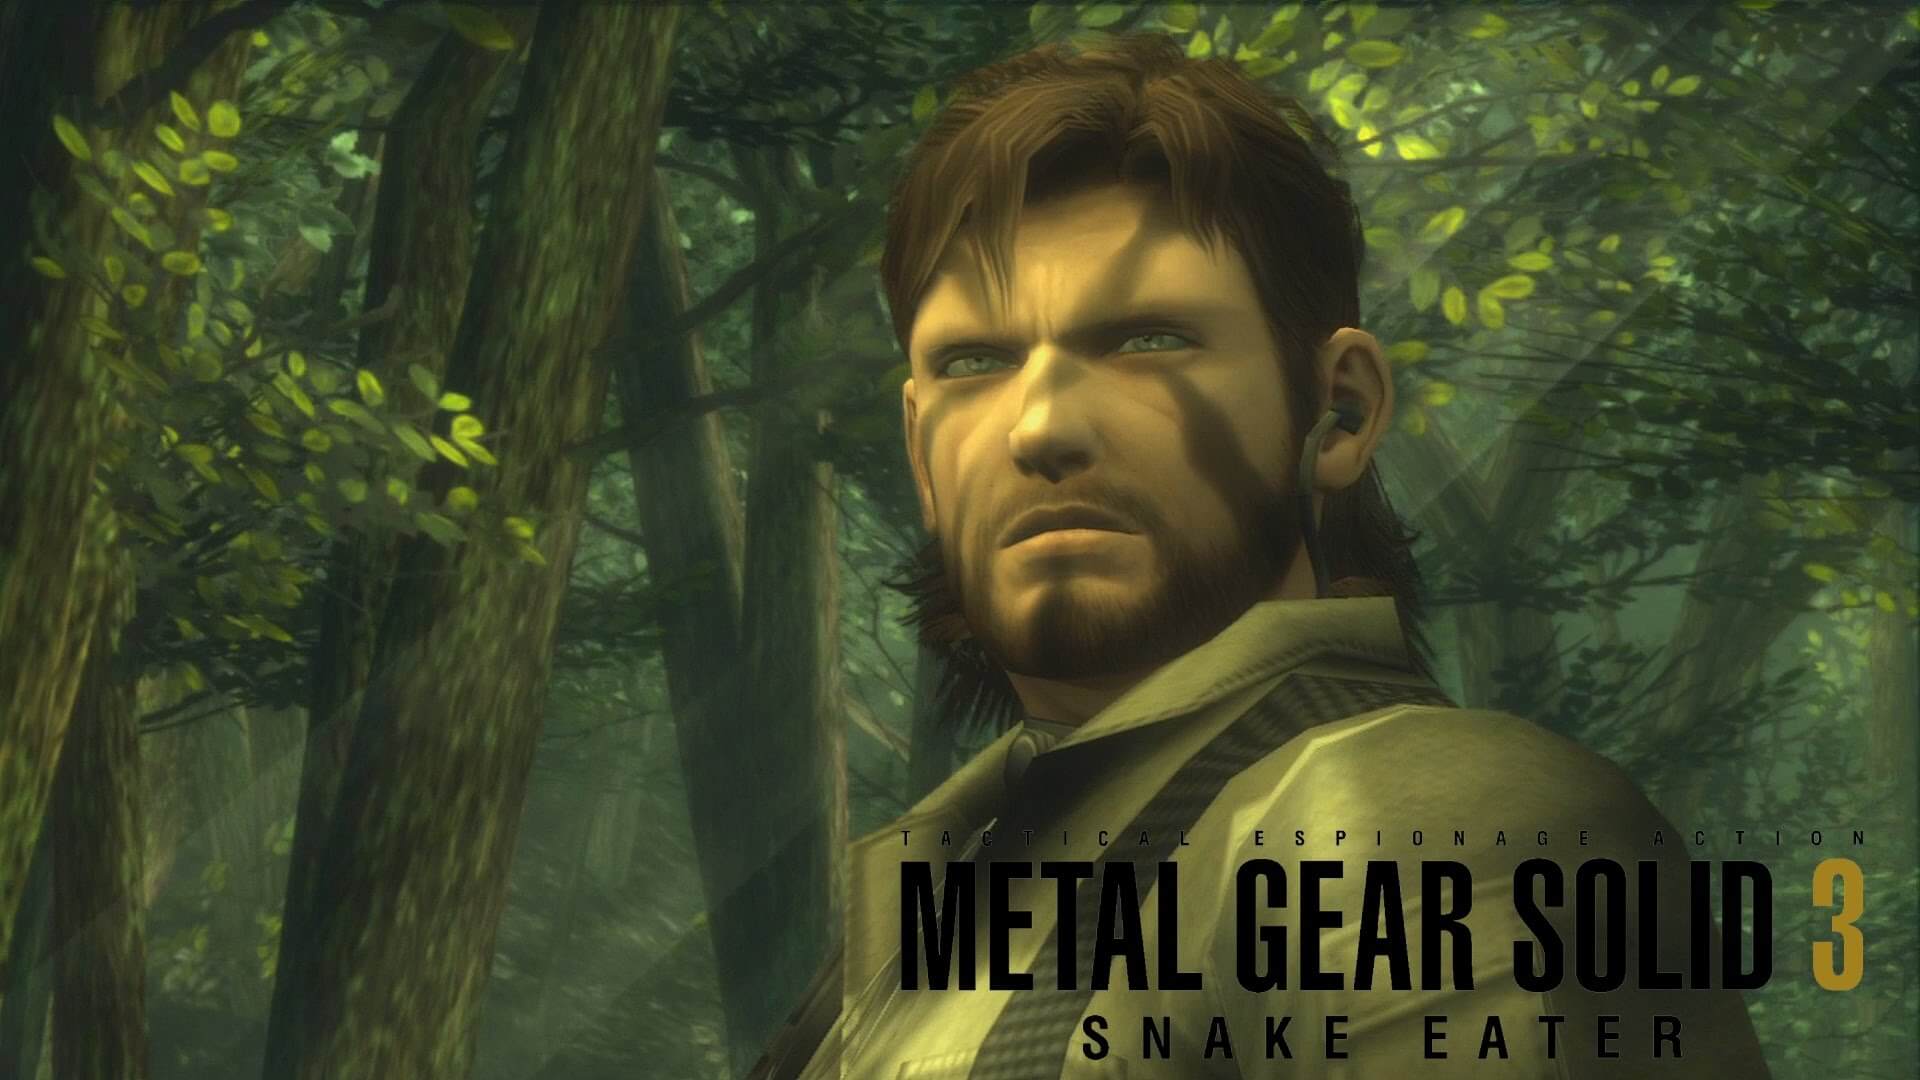 Metal Gear Solid 3 lore